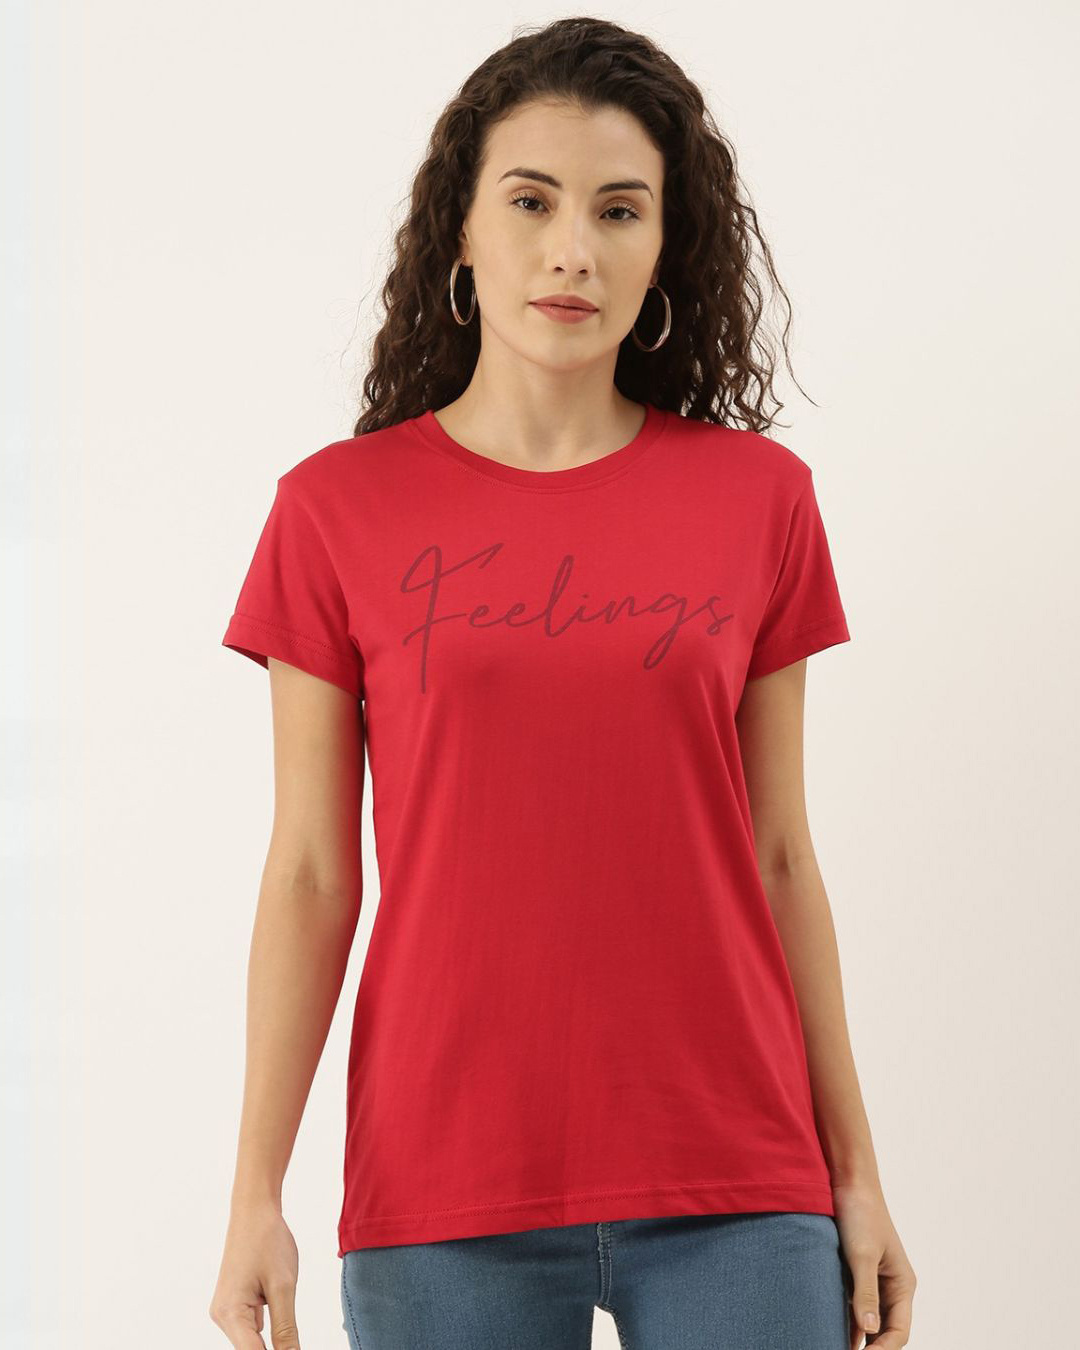 Buy Women's Red Typography T-shirt for Women Red Online at Bewakoof